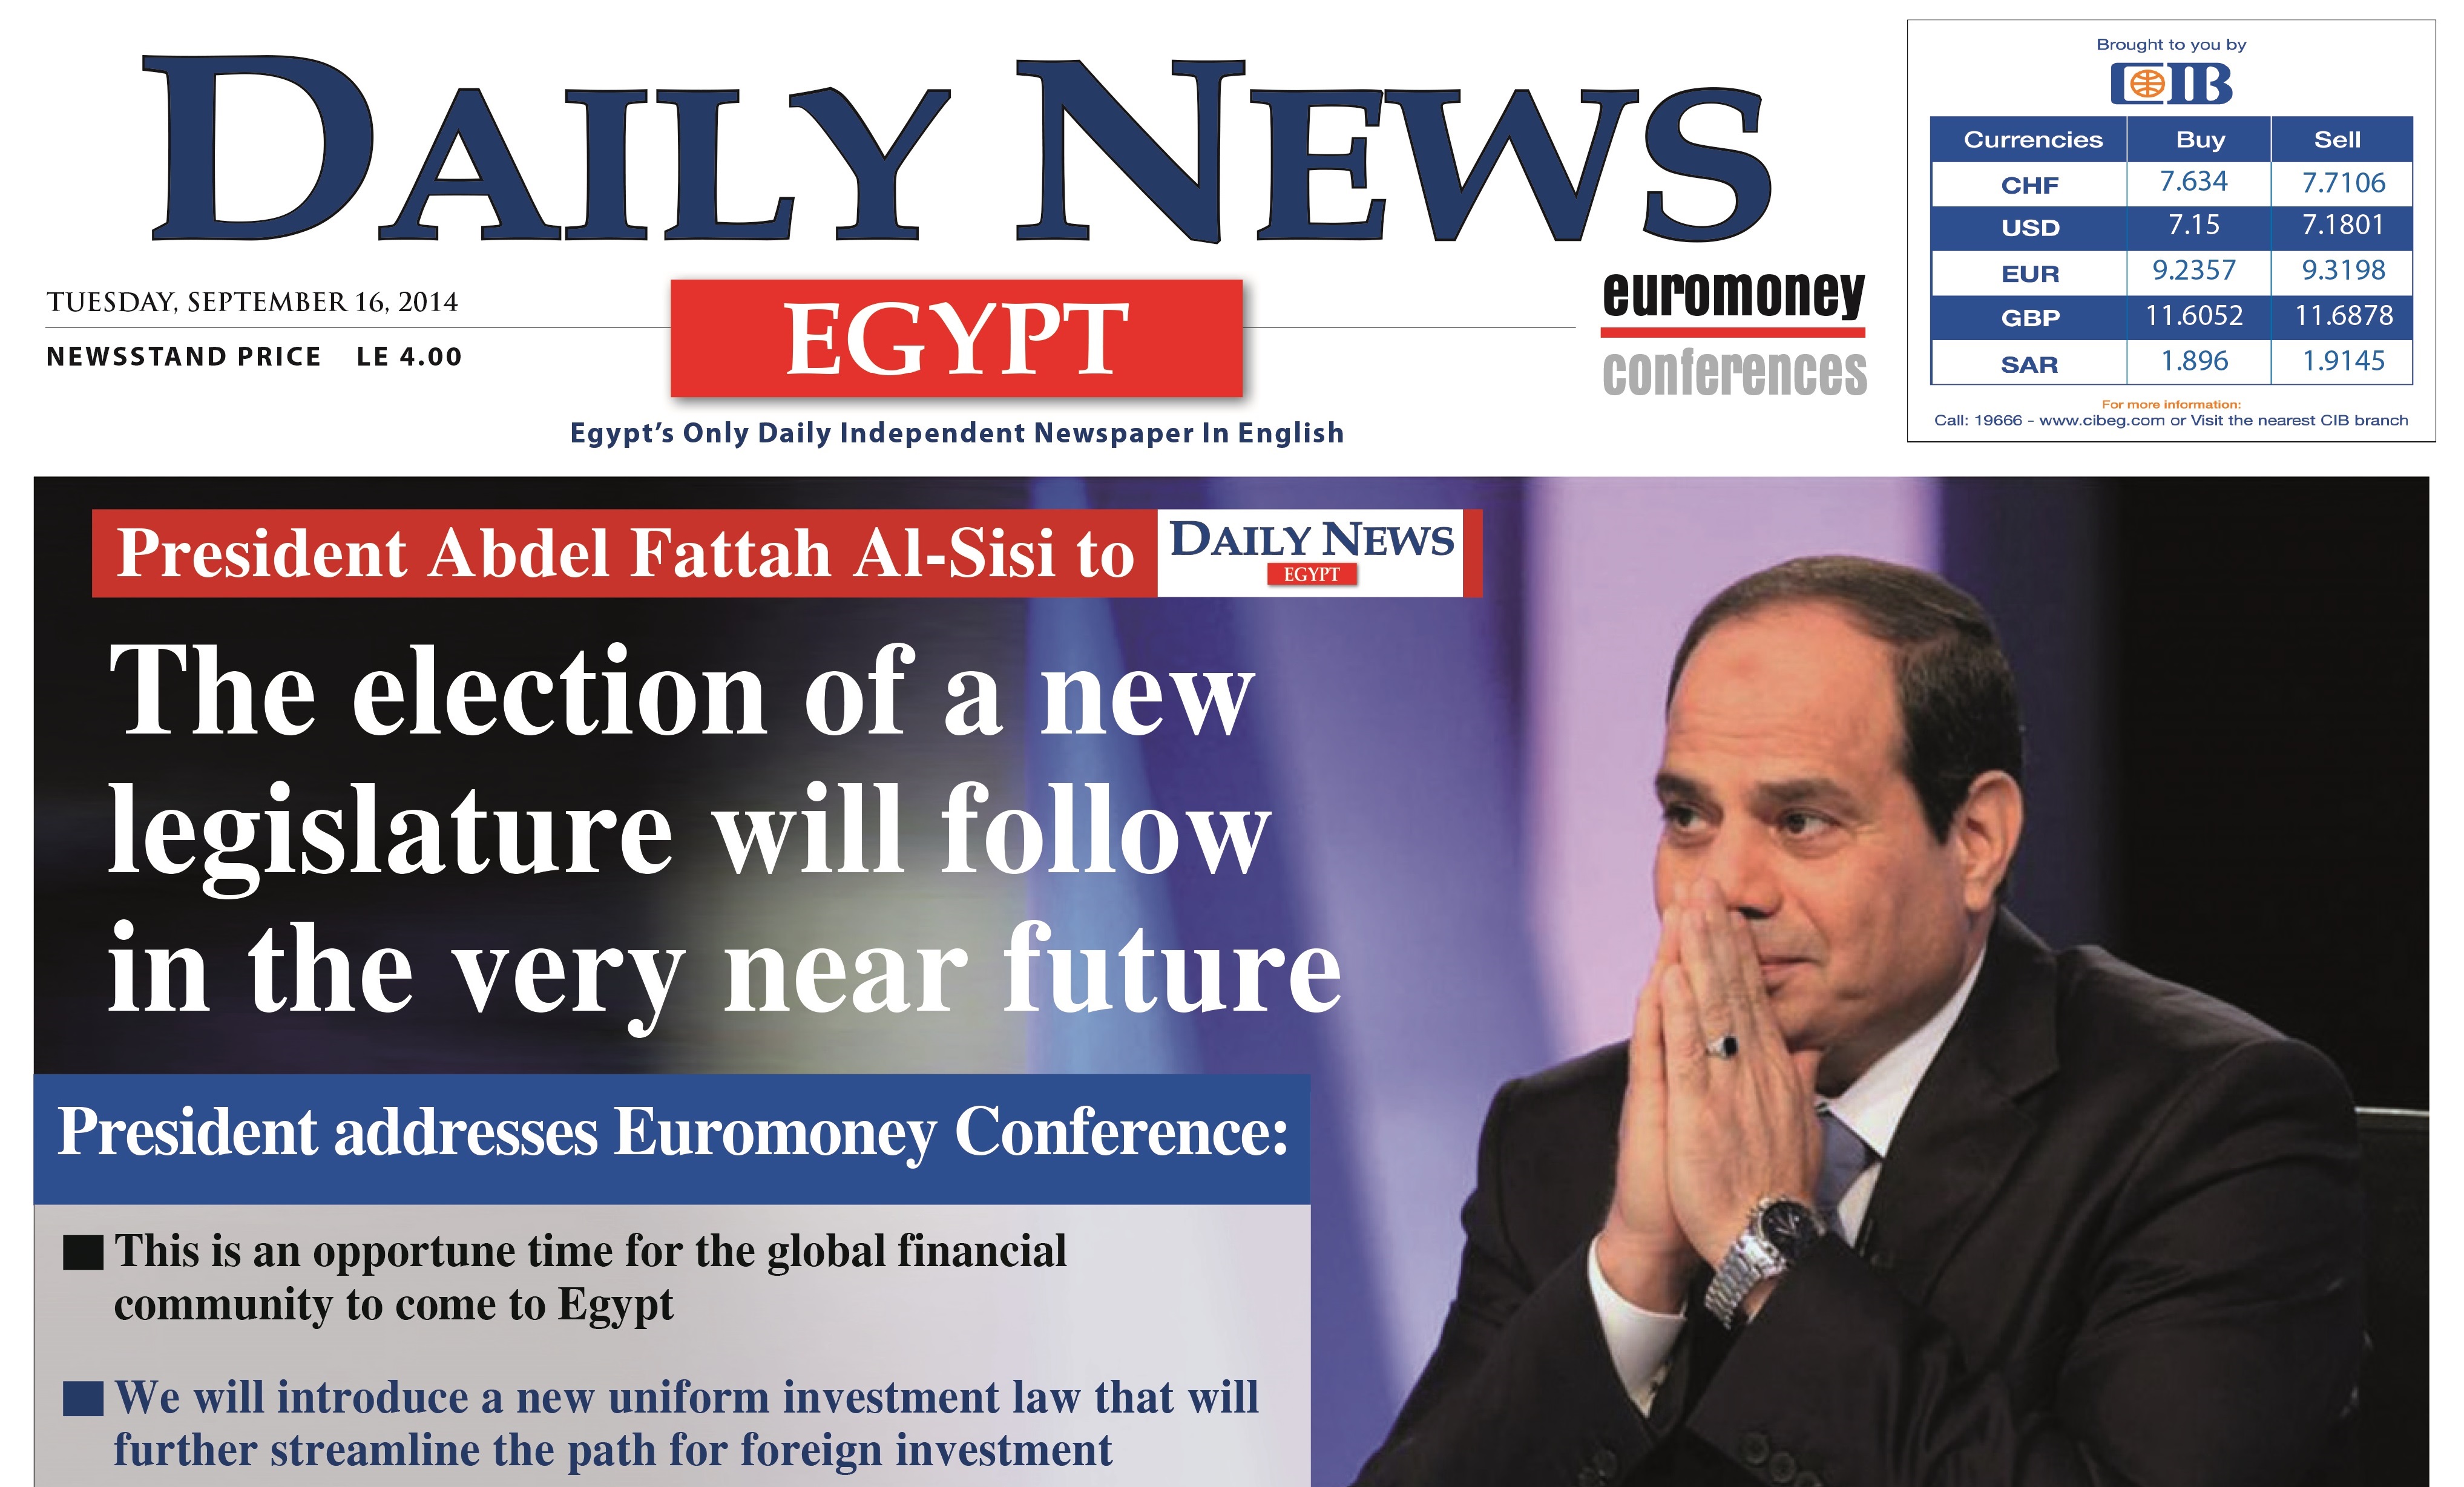 Daily News Egypt (DNE) is an English-language daily Egyptian newspaper esta...